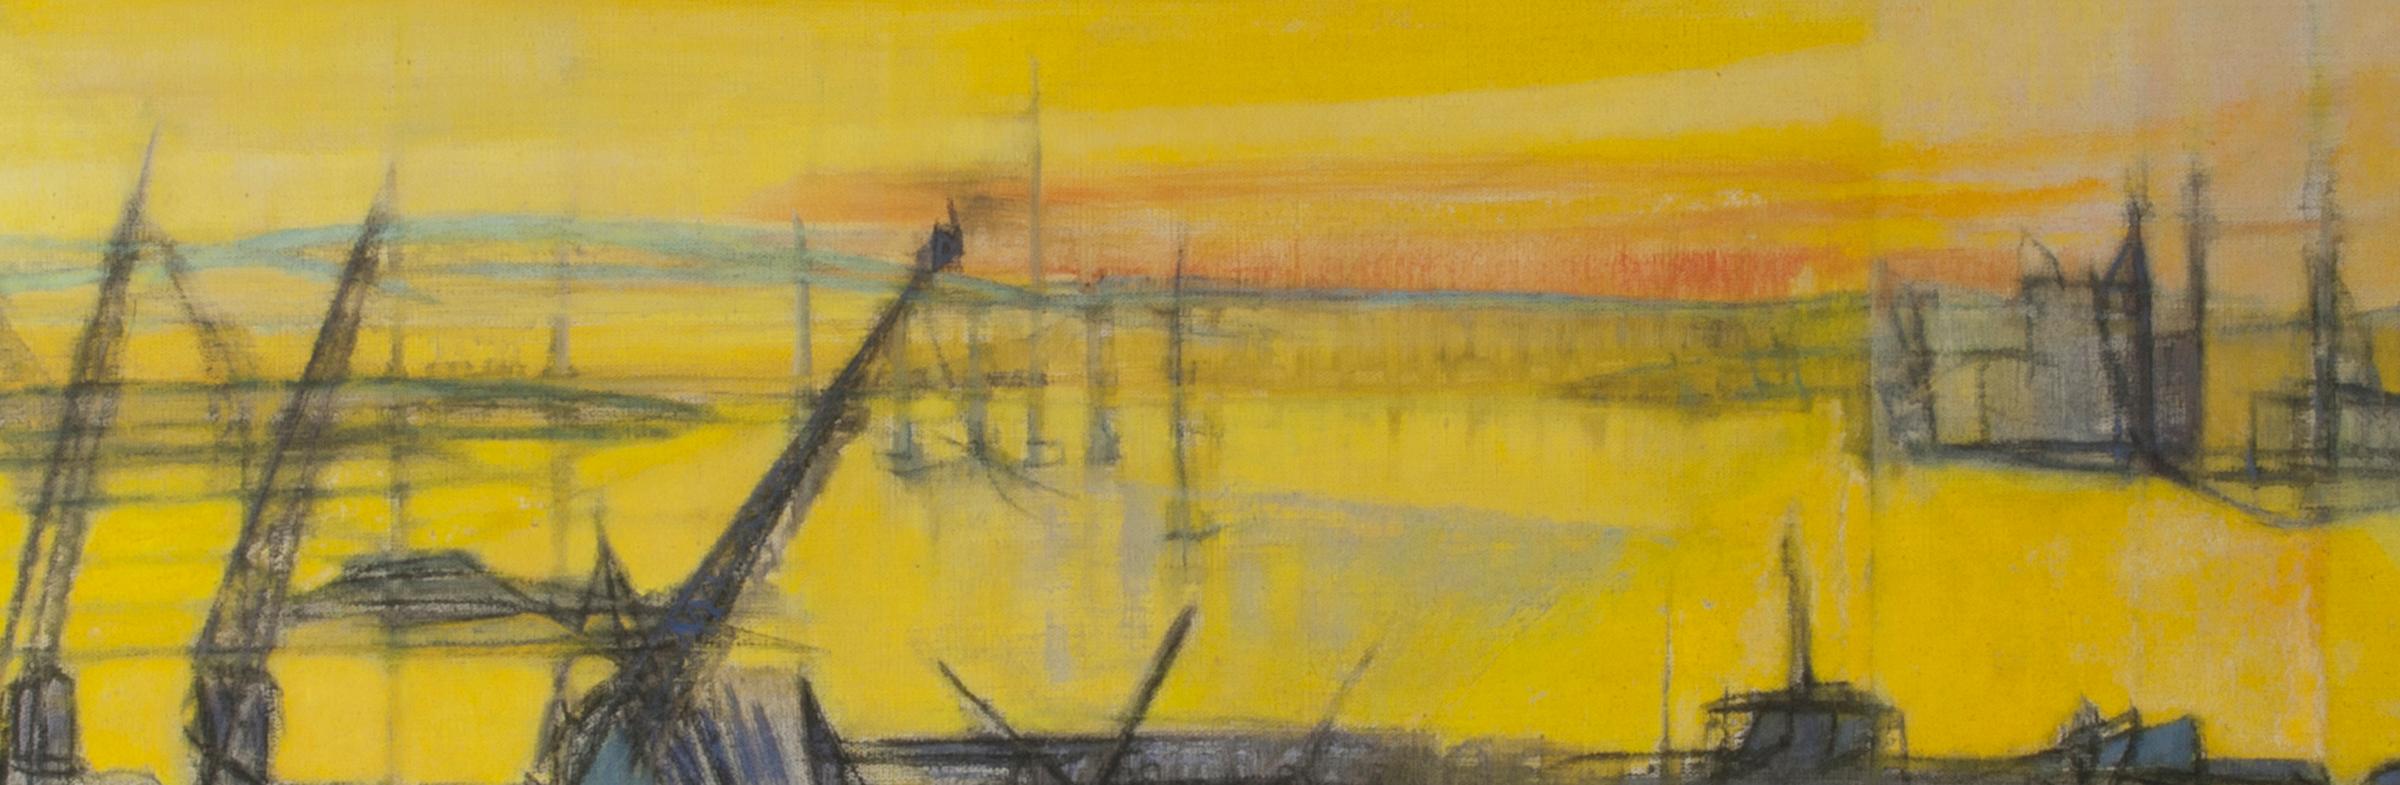 South Hampton 8:45PM (Abstrakt), Painting, von Cleve Gray